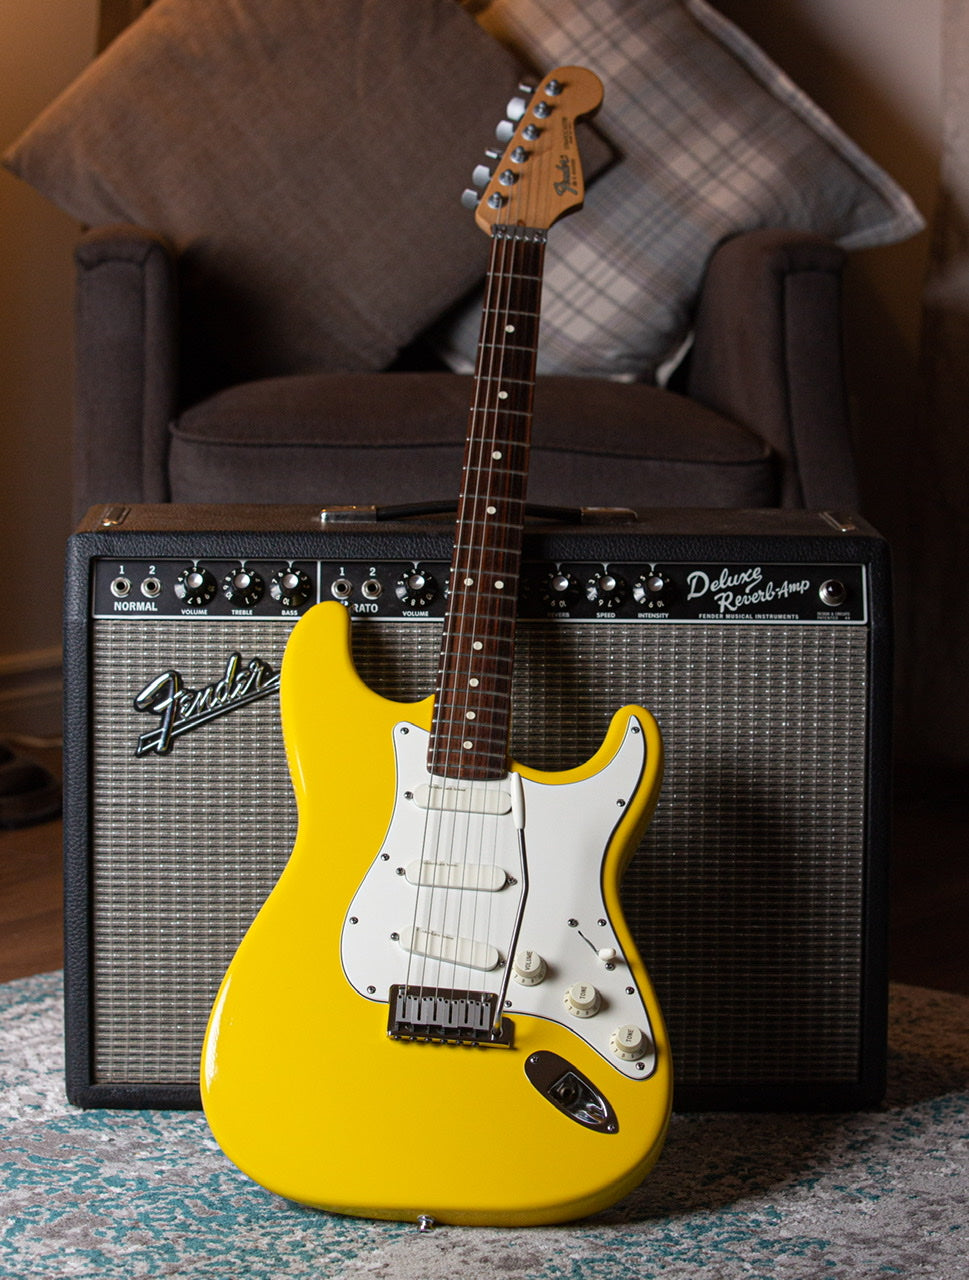 Fender Stratocaster Graffiti Yellow